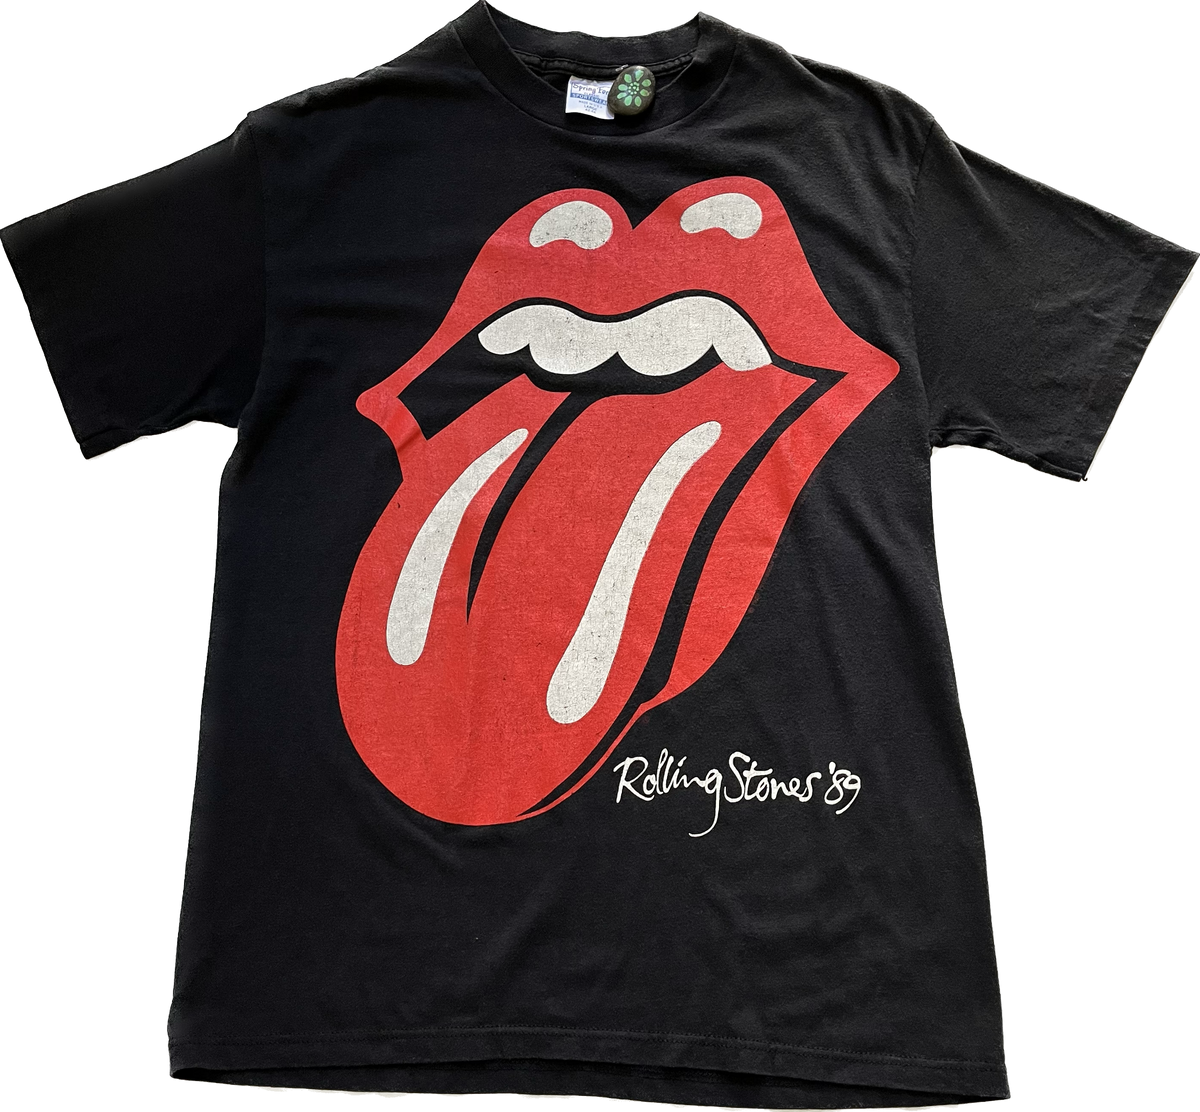 Vintage 1989 Rolling Stones Tour Tee